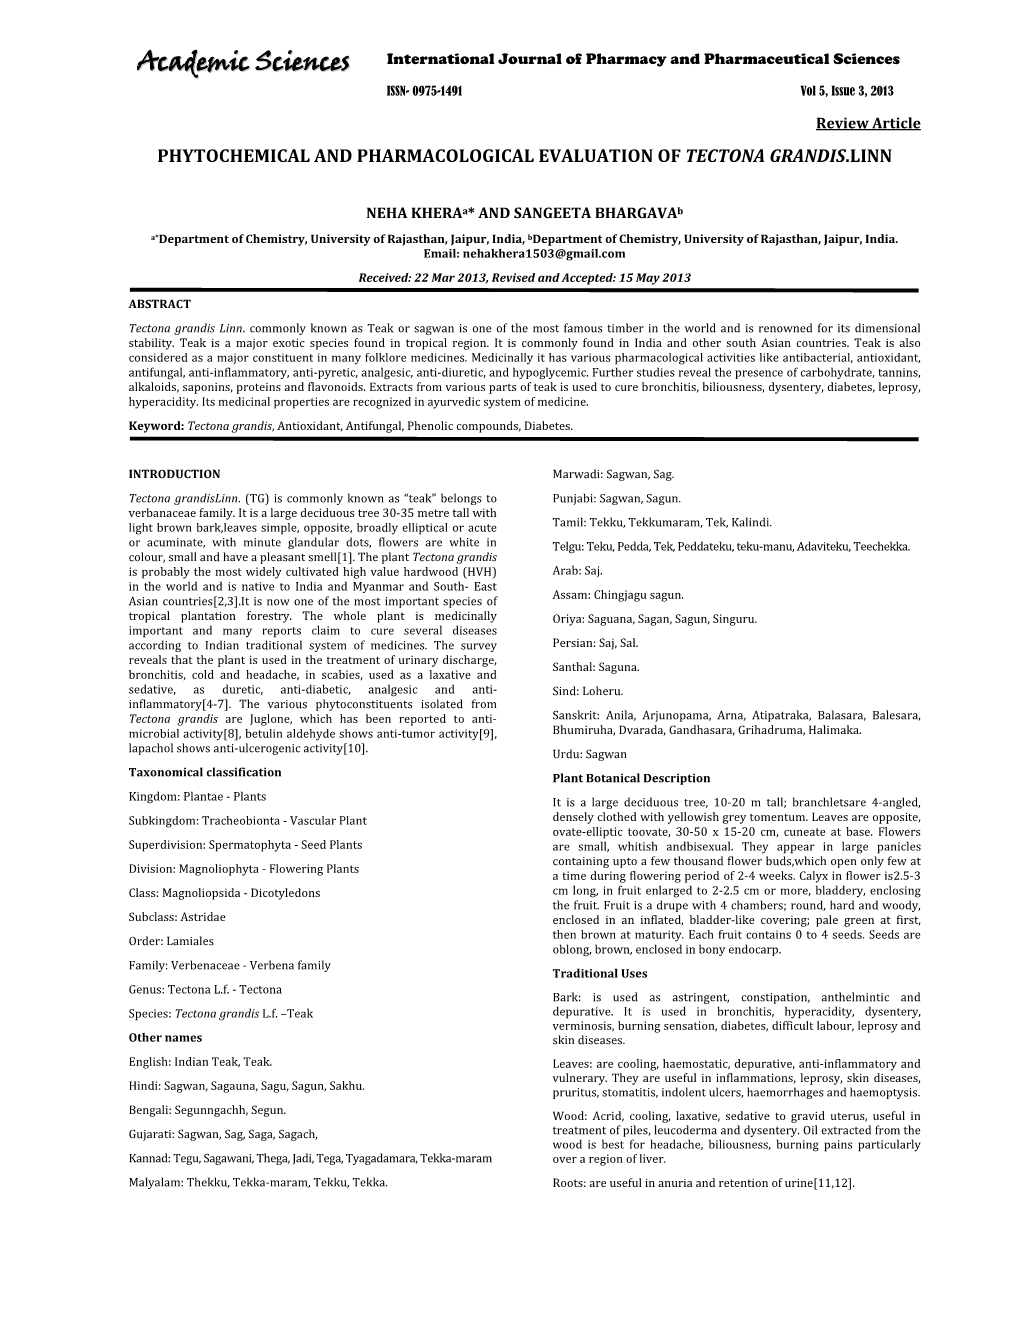 Phytochemical and Pharmacological Evaluation of Tectona Grandis.Linn